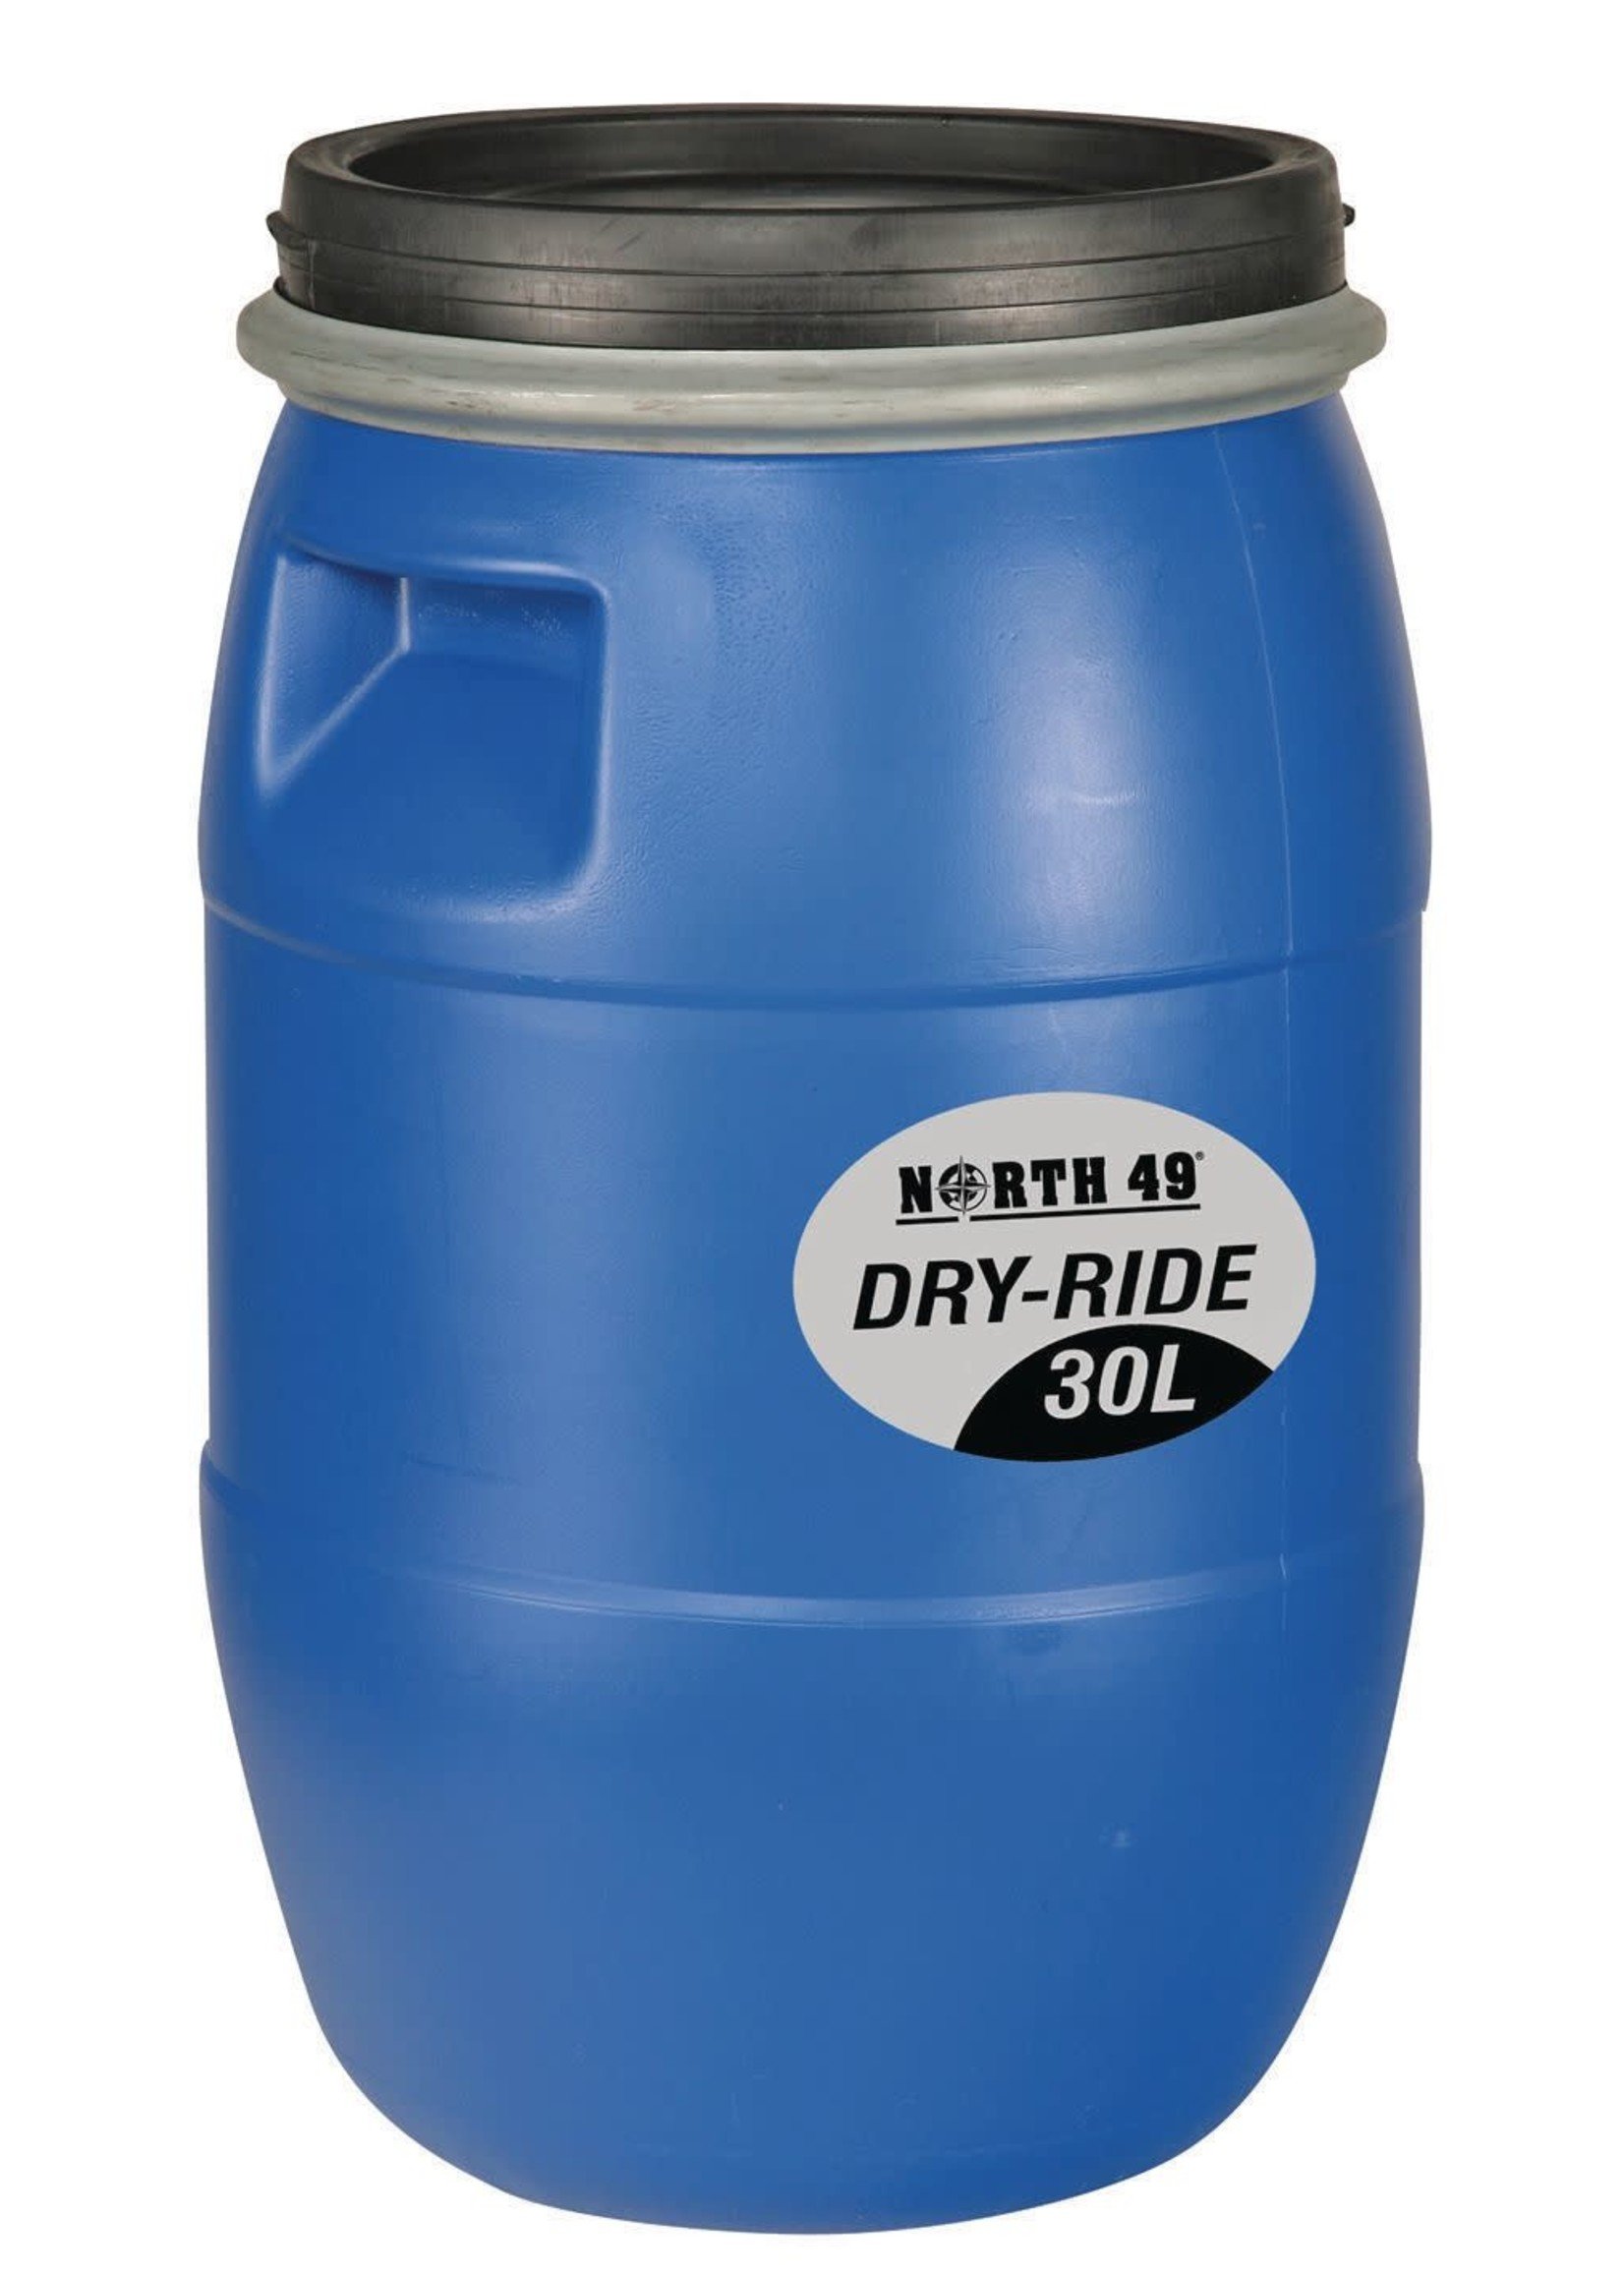 North 49 North 49 Dry-Ride Barrel 30L